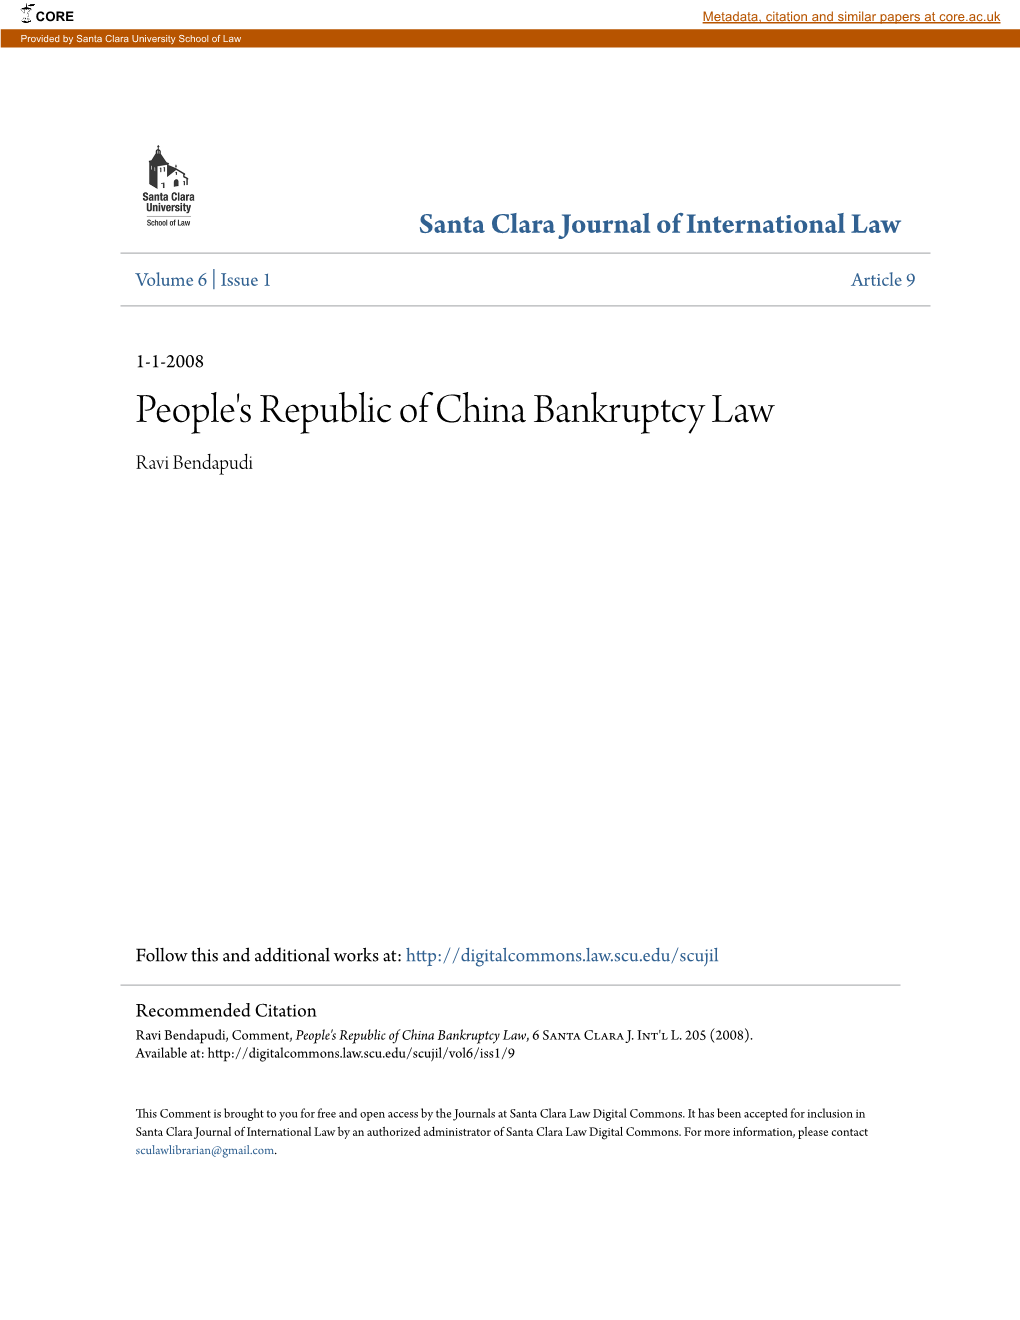 People's Republic of China Bankruptcy Law Ravi Bendapudi